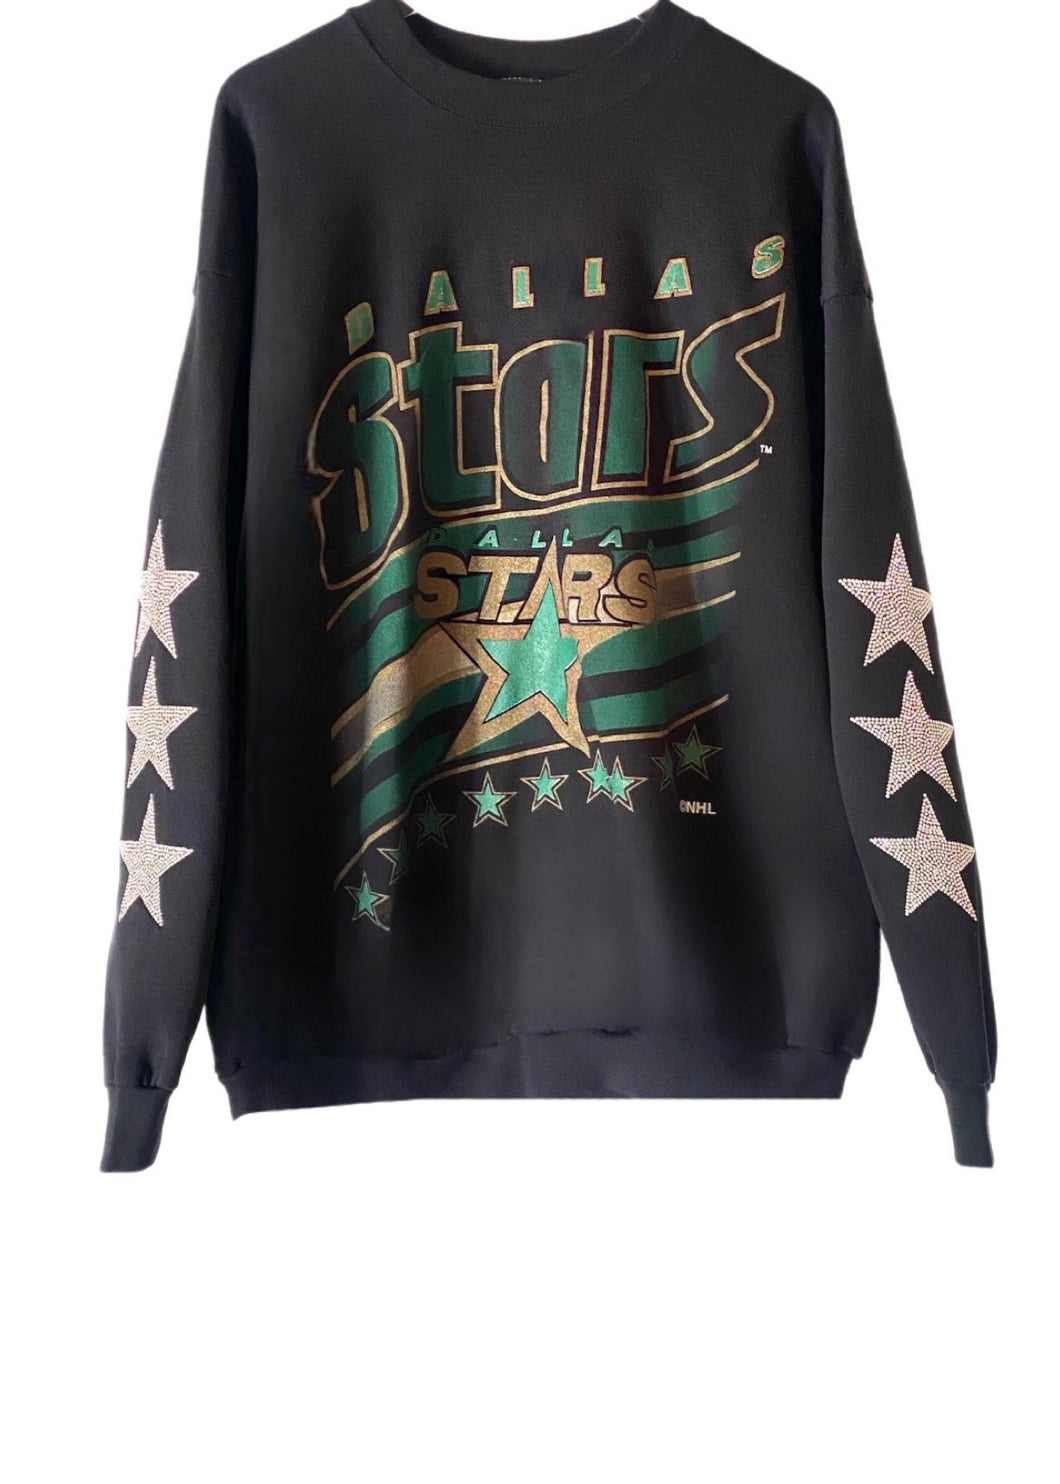 Dallas Stars, NHL One of a KIND Vintage Sweatshirt with Three Crystal Stars Design